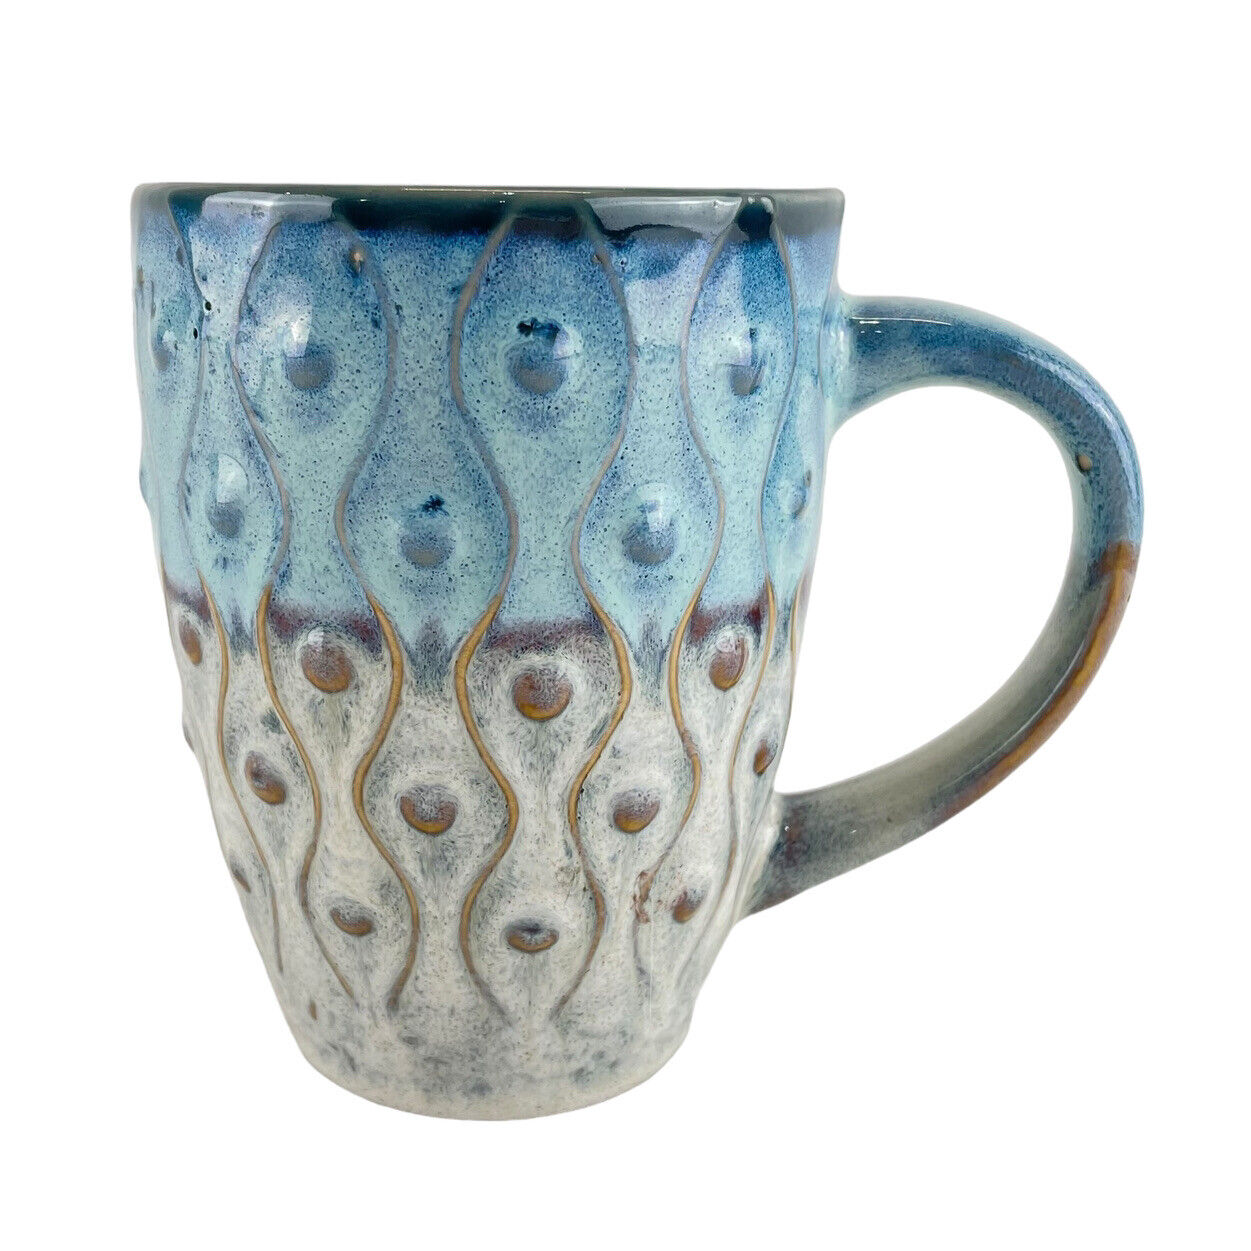 PRIMA DESIGN Pottery Single Textured Blue Hobnail Wave Coffee Mug Tea Cup 18 oz